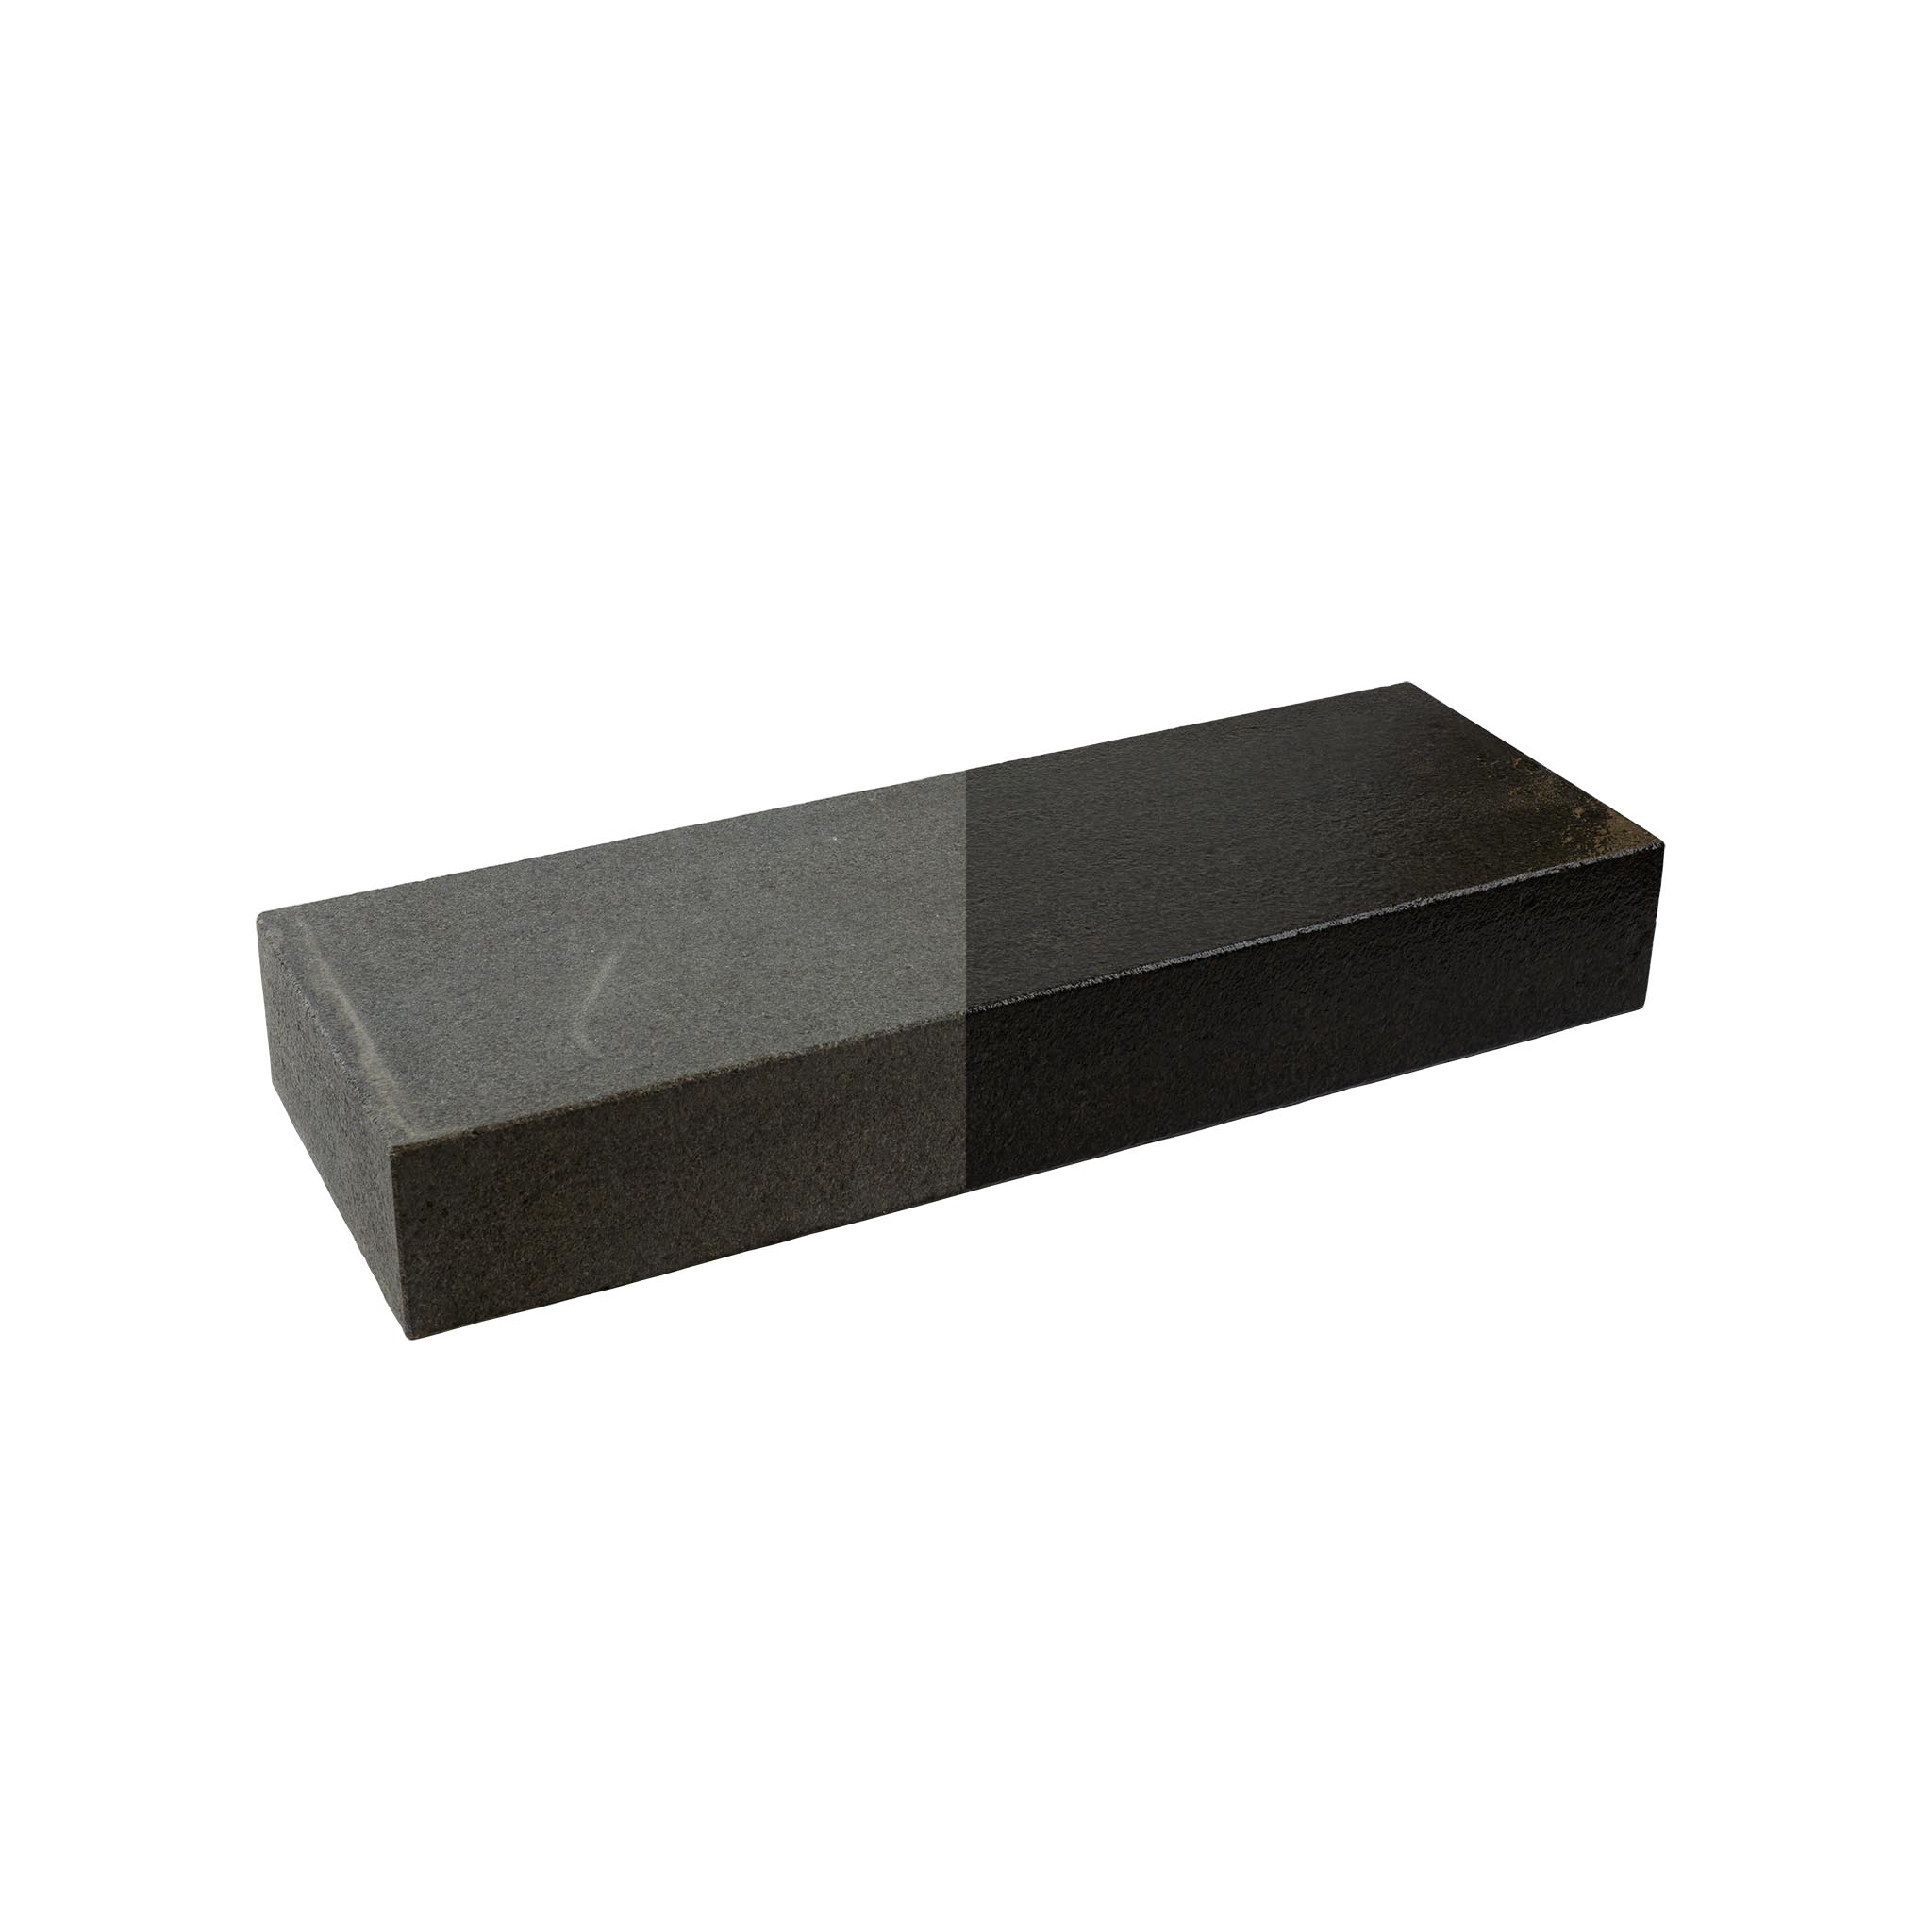 Blockstufen, Gabbro schwarz (TT Black) geflammt & gestrahlt, Gabbro Blockstufe, 15 x 35 x 100 cm, schwarz, 